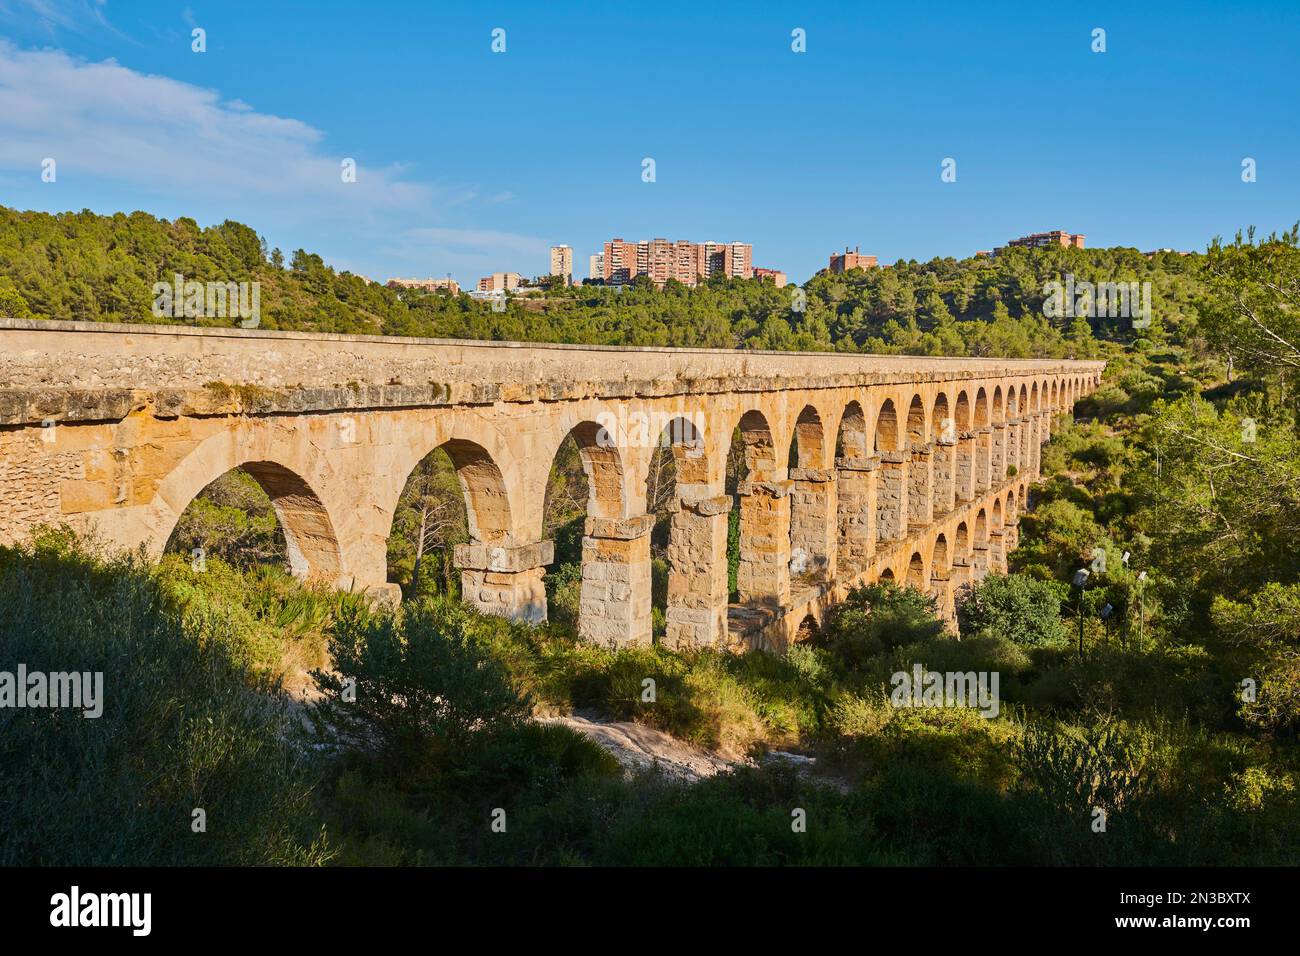 Altes römisches Aquädukt, das Ferreres Aquädukt (Aqüeducte de les Ferreres), auch bekannt als Pont del Diable (Teufelsbrücke), im Gegensatz zum modernen Bui... Stockfoto